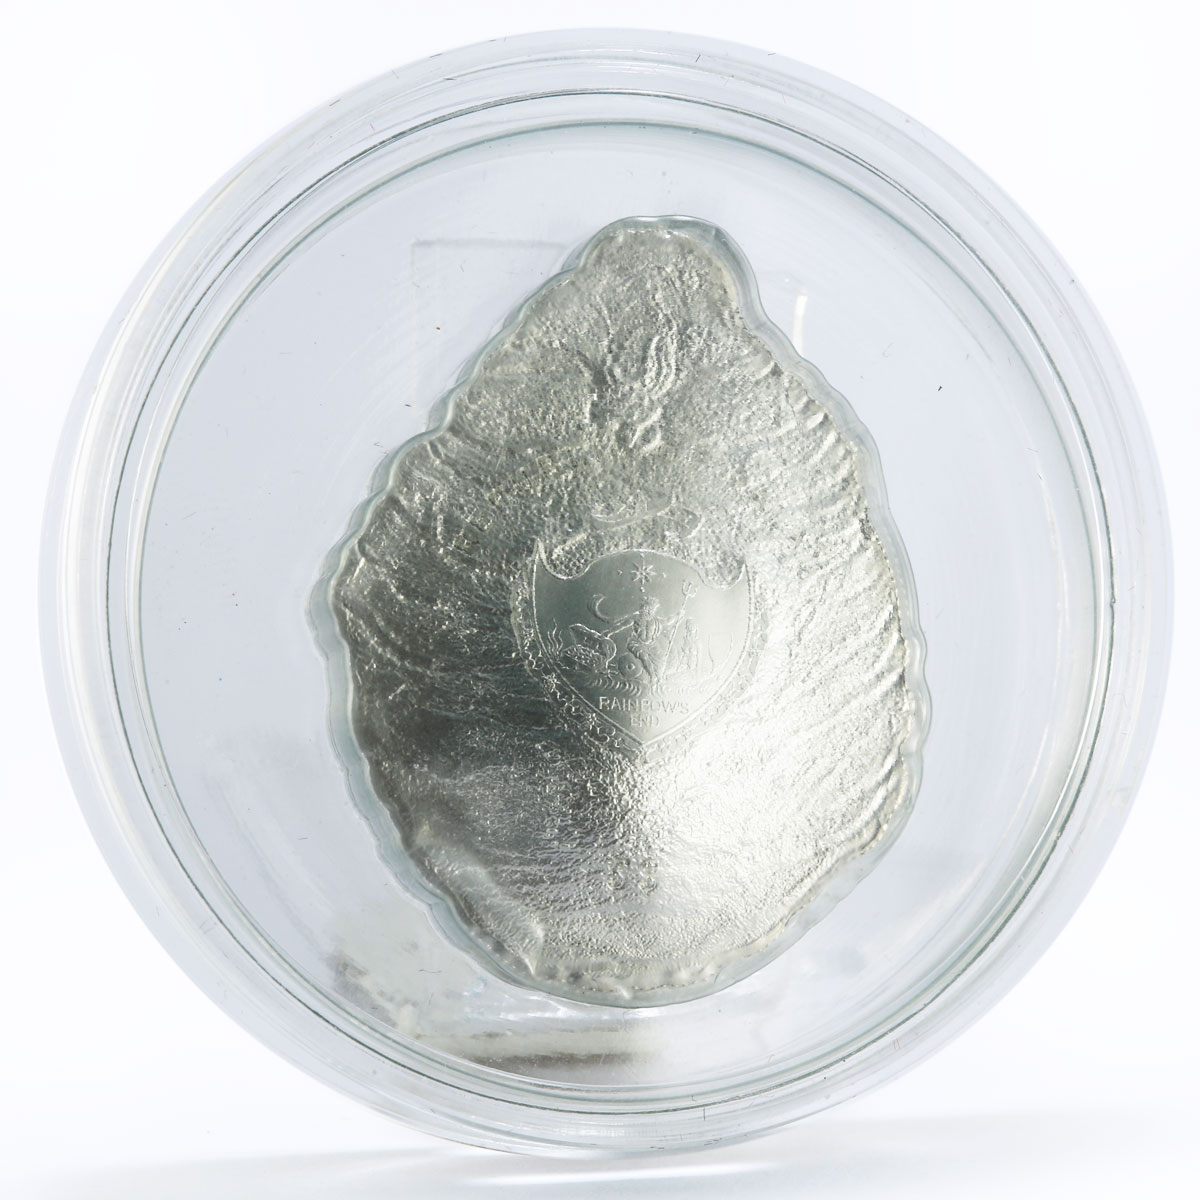 Palau 5 dollars Oyster Sea Treasures Pearl proof silver coin 2011